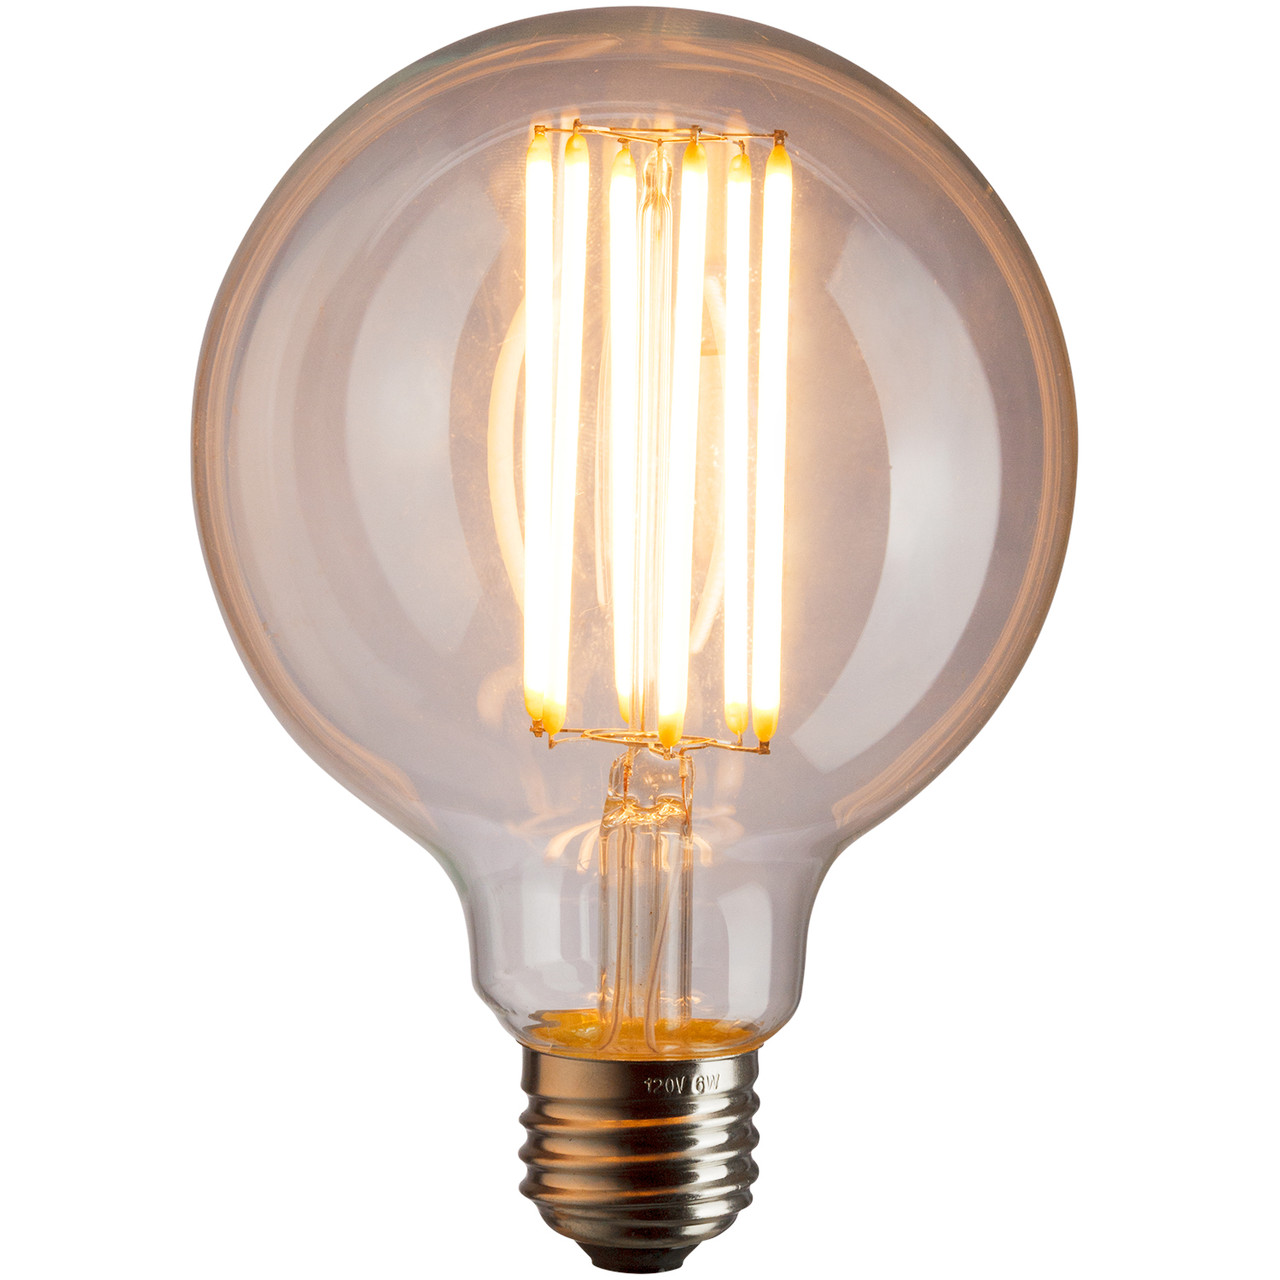 Sunlite - Replacement Bulb - 6W, 120V, 480lm, 2200K, Amber Light - Apollo Lighting